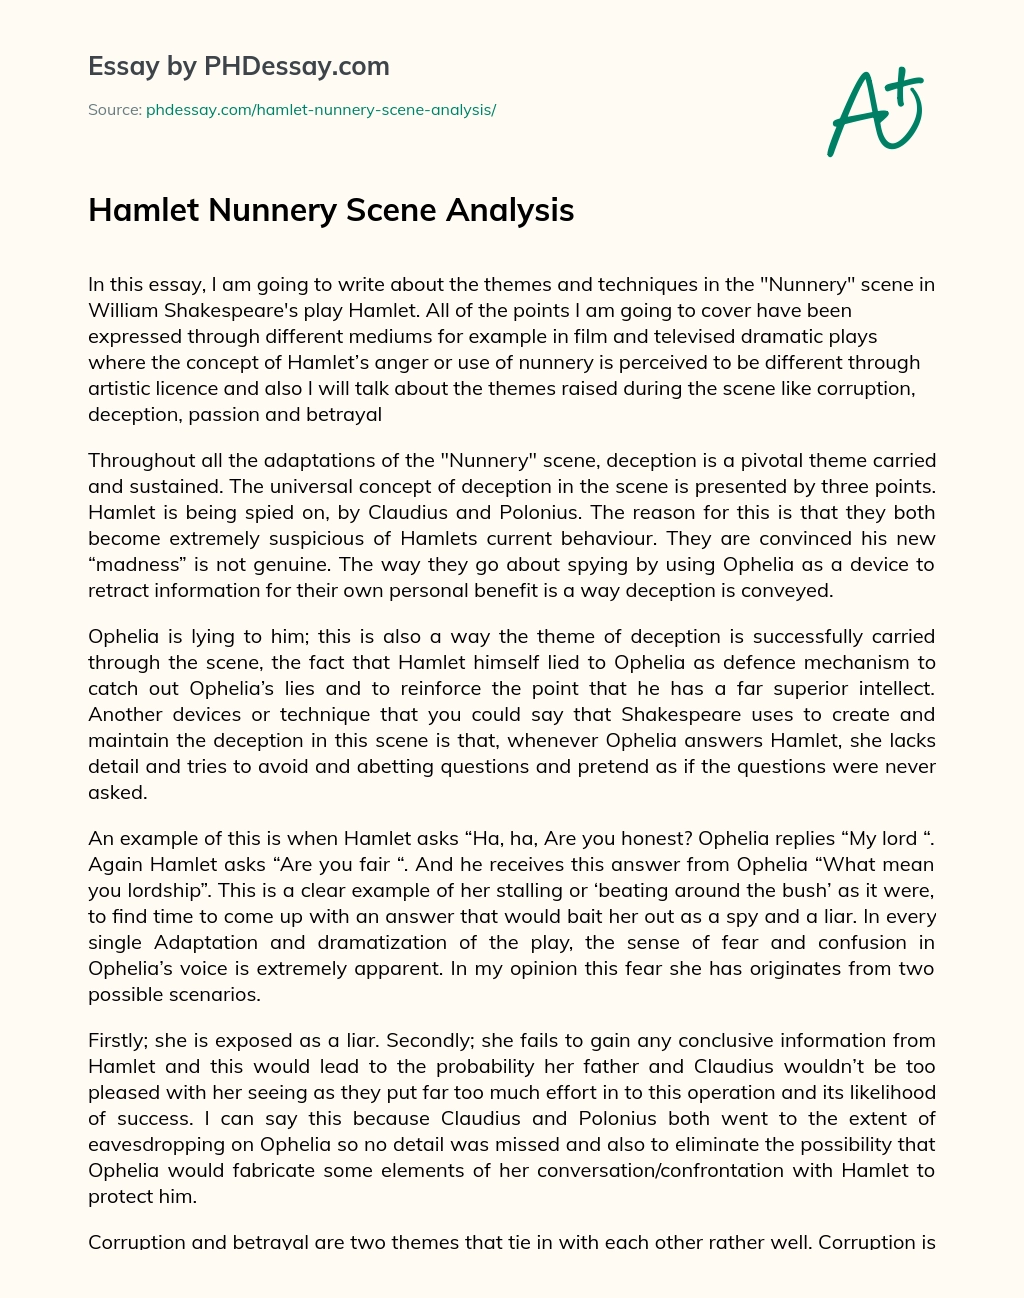 Hamlet Nunnery Scene Analysis essay